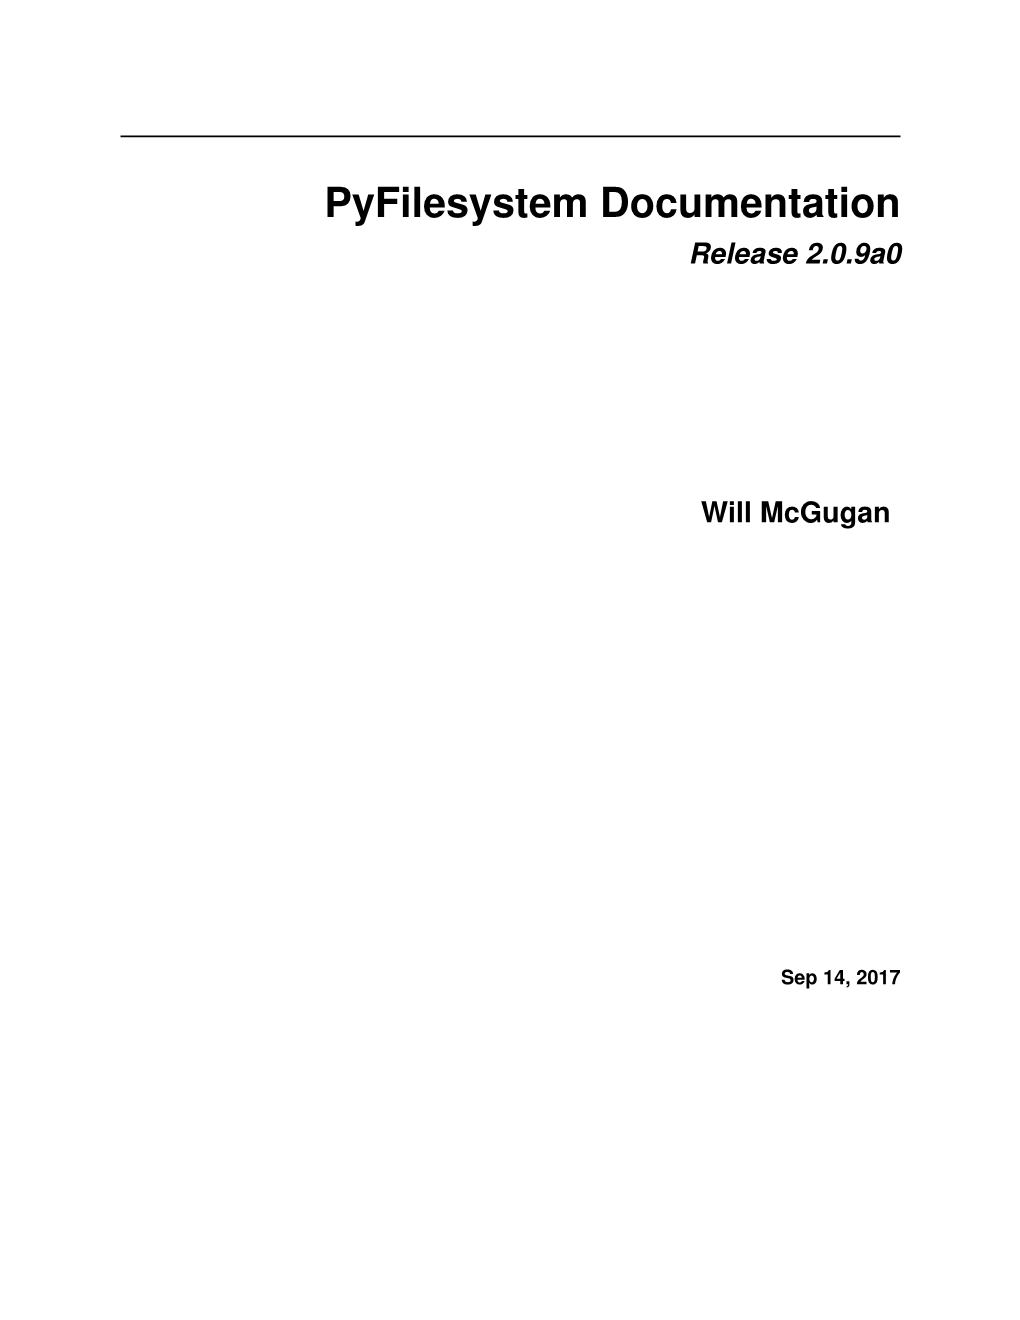 Pyfilesystem Documentation Release 2.0.9A0